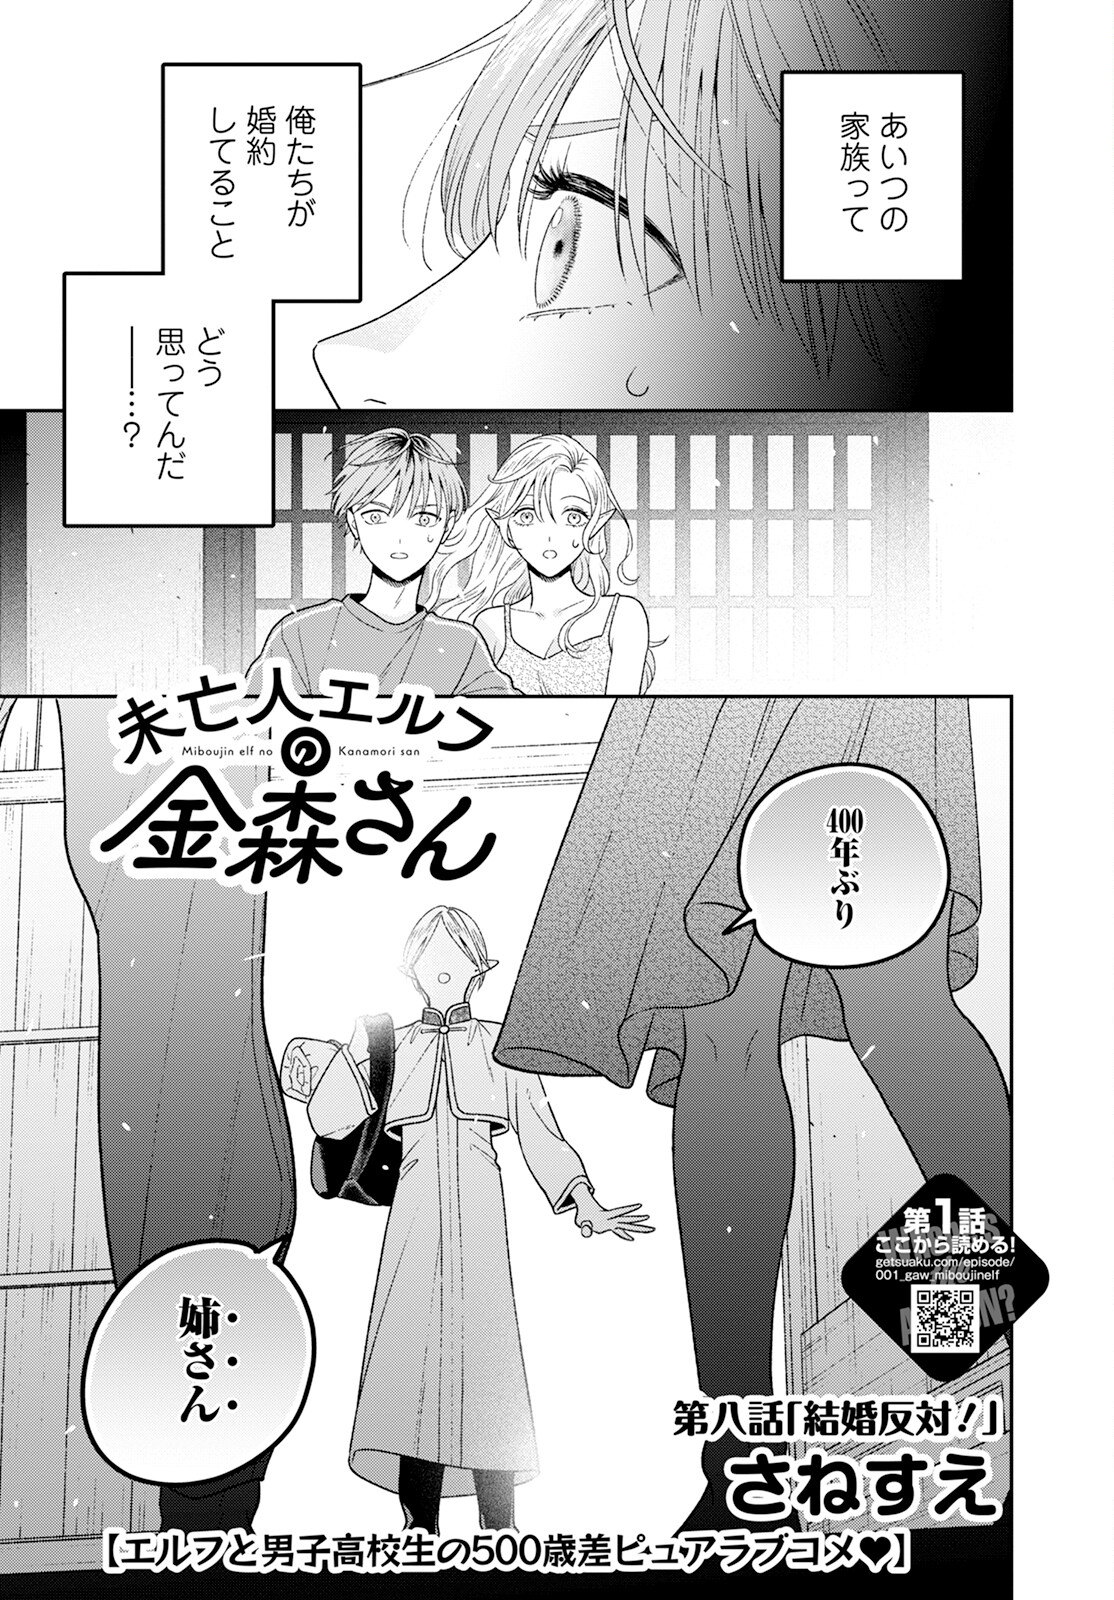 Miboujin Elf no Kanamori-san - Chapter 8 - Page 3